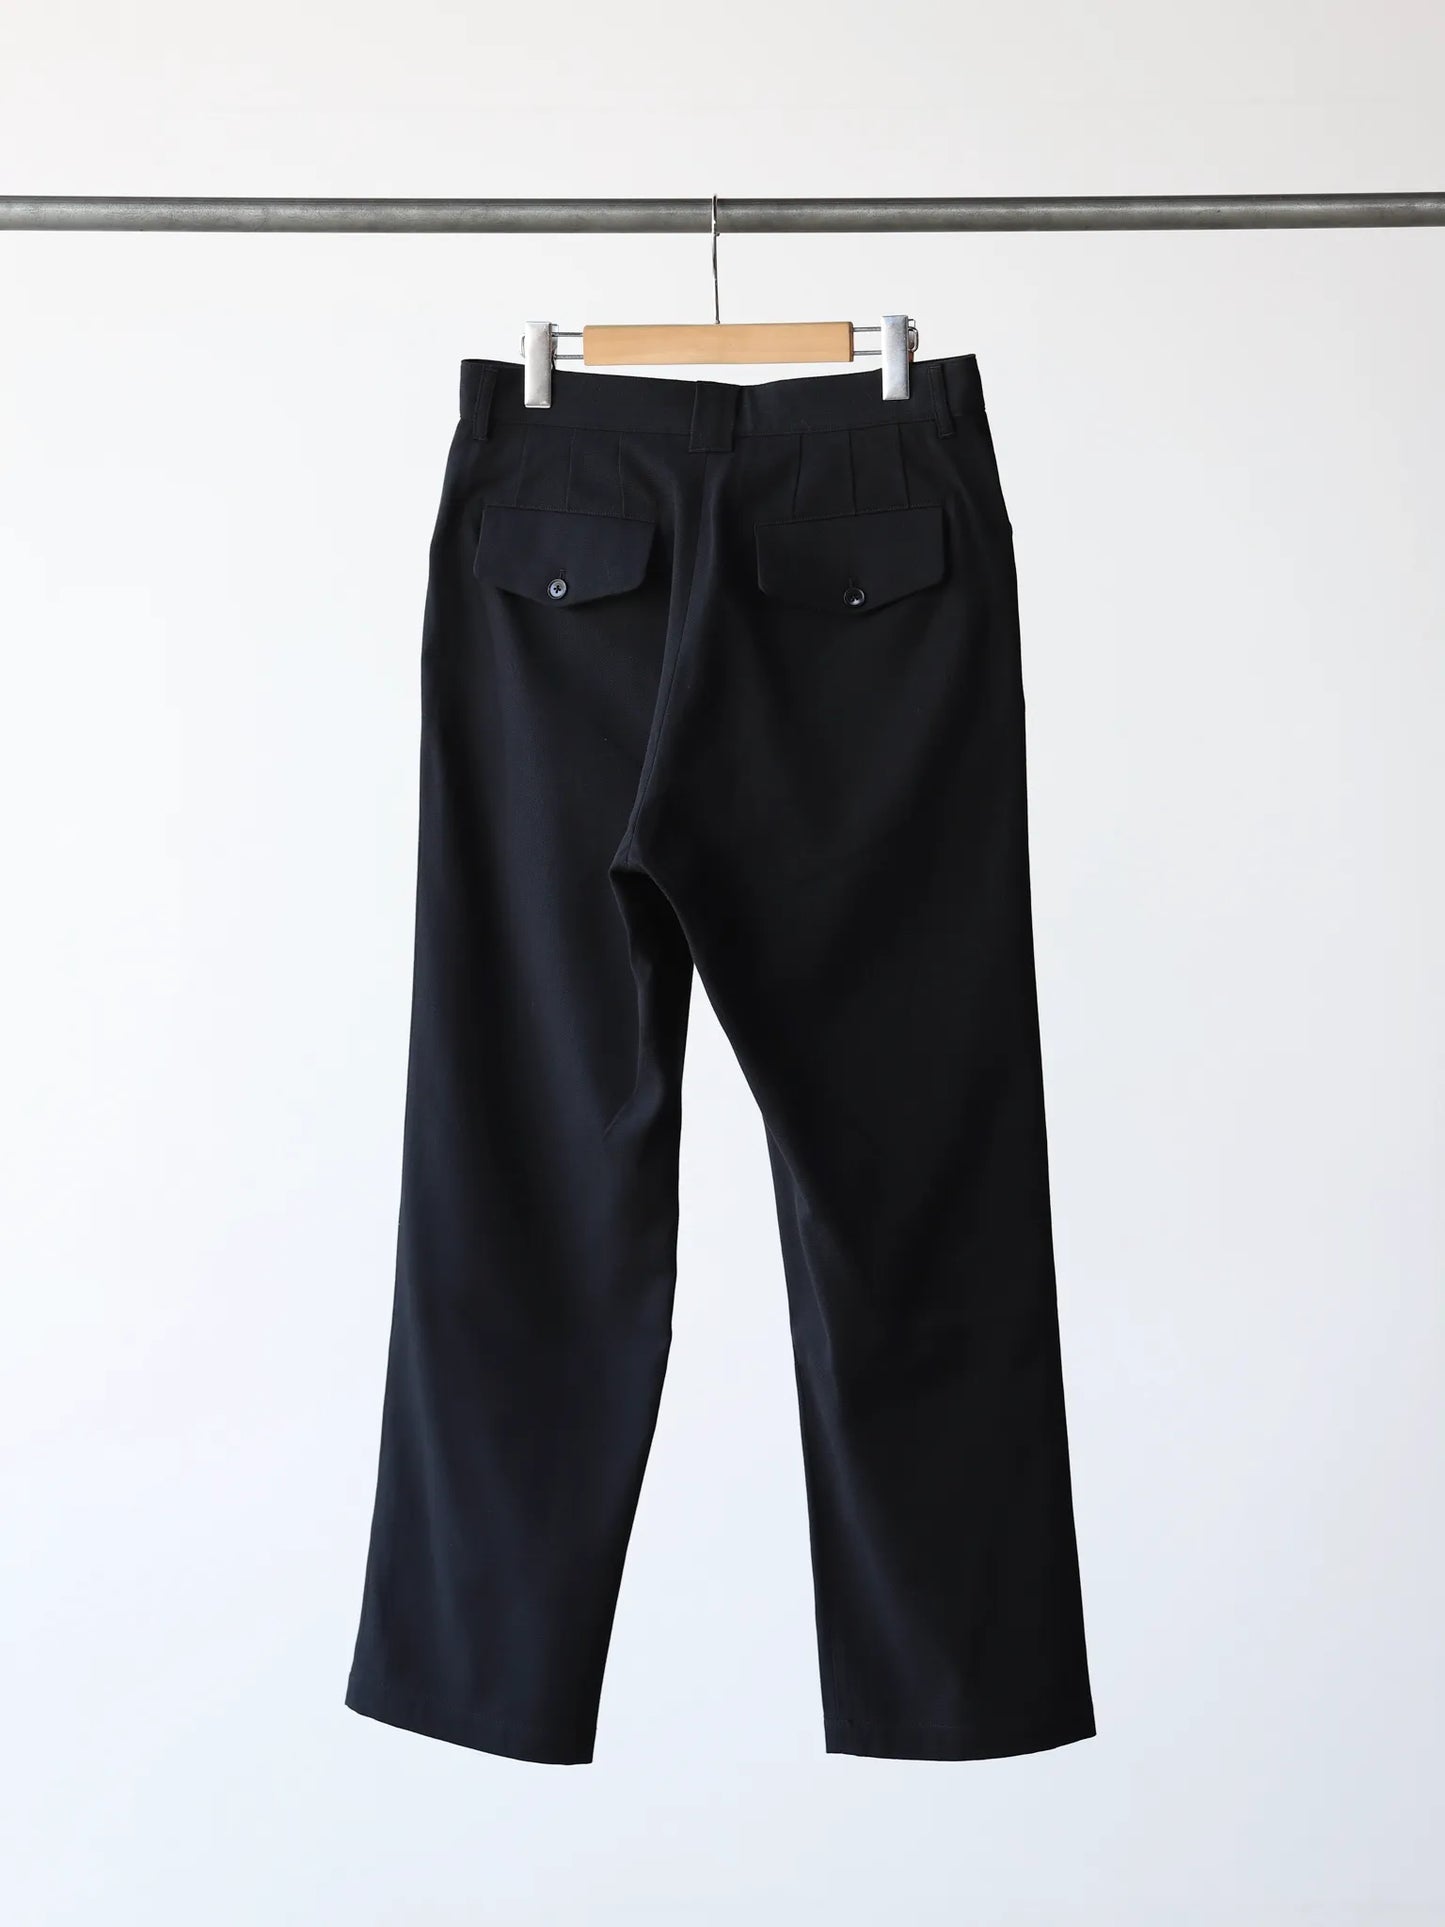 tilt-the-authentics-double-cloth-french-trousers-black-2